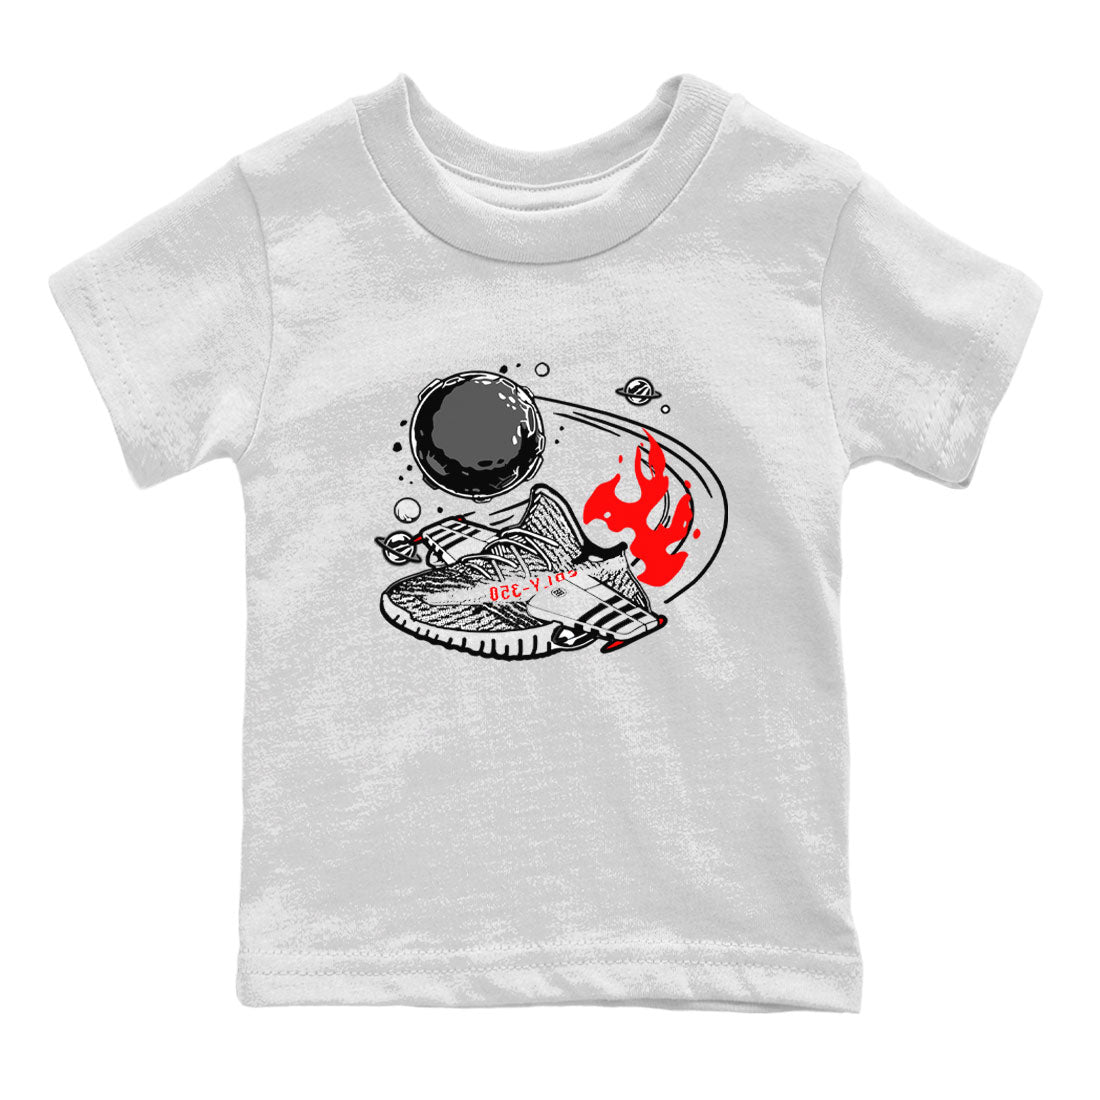 Yeezy 350 Zebra shirt to match Yeezys Rocket Boost Streetwear Sneaker Shirt Yeezy Boost 350 V2 Zebra Drip Gear Zone Sneaker Matching Clothing Baby Toddler White 2 T-Shirt